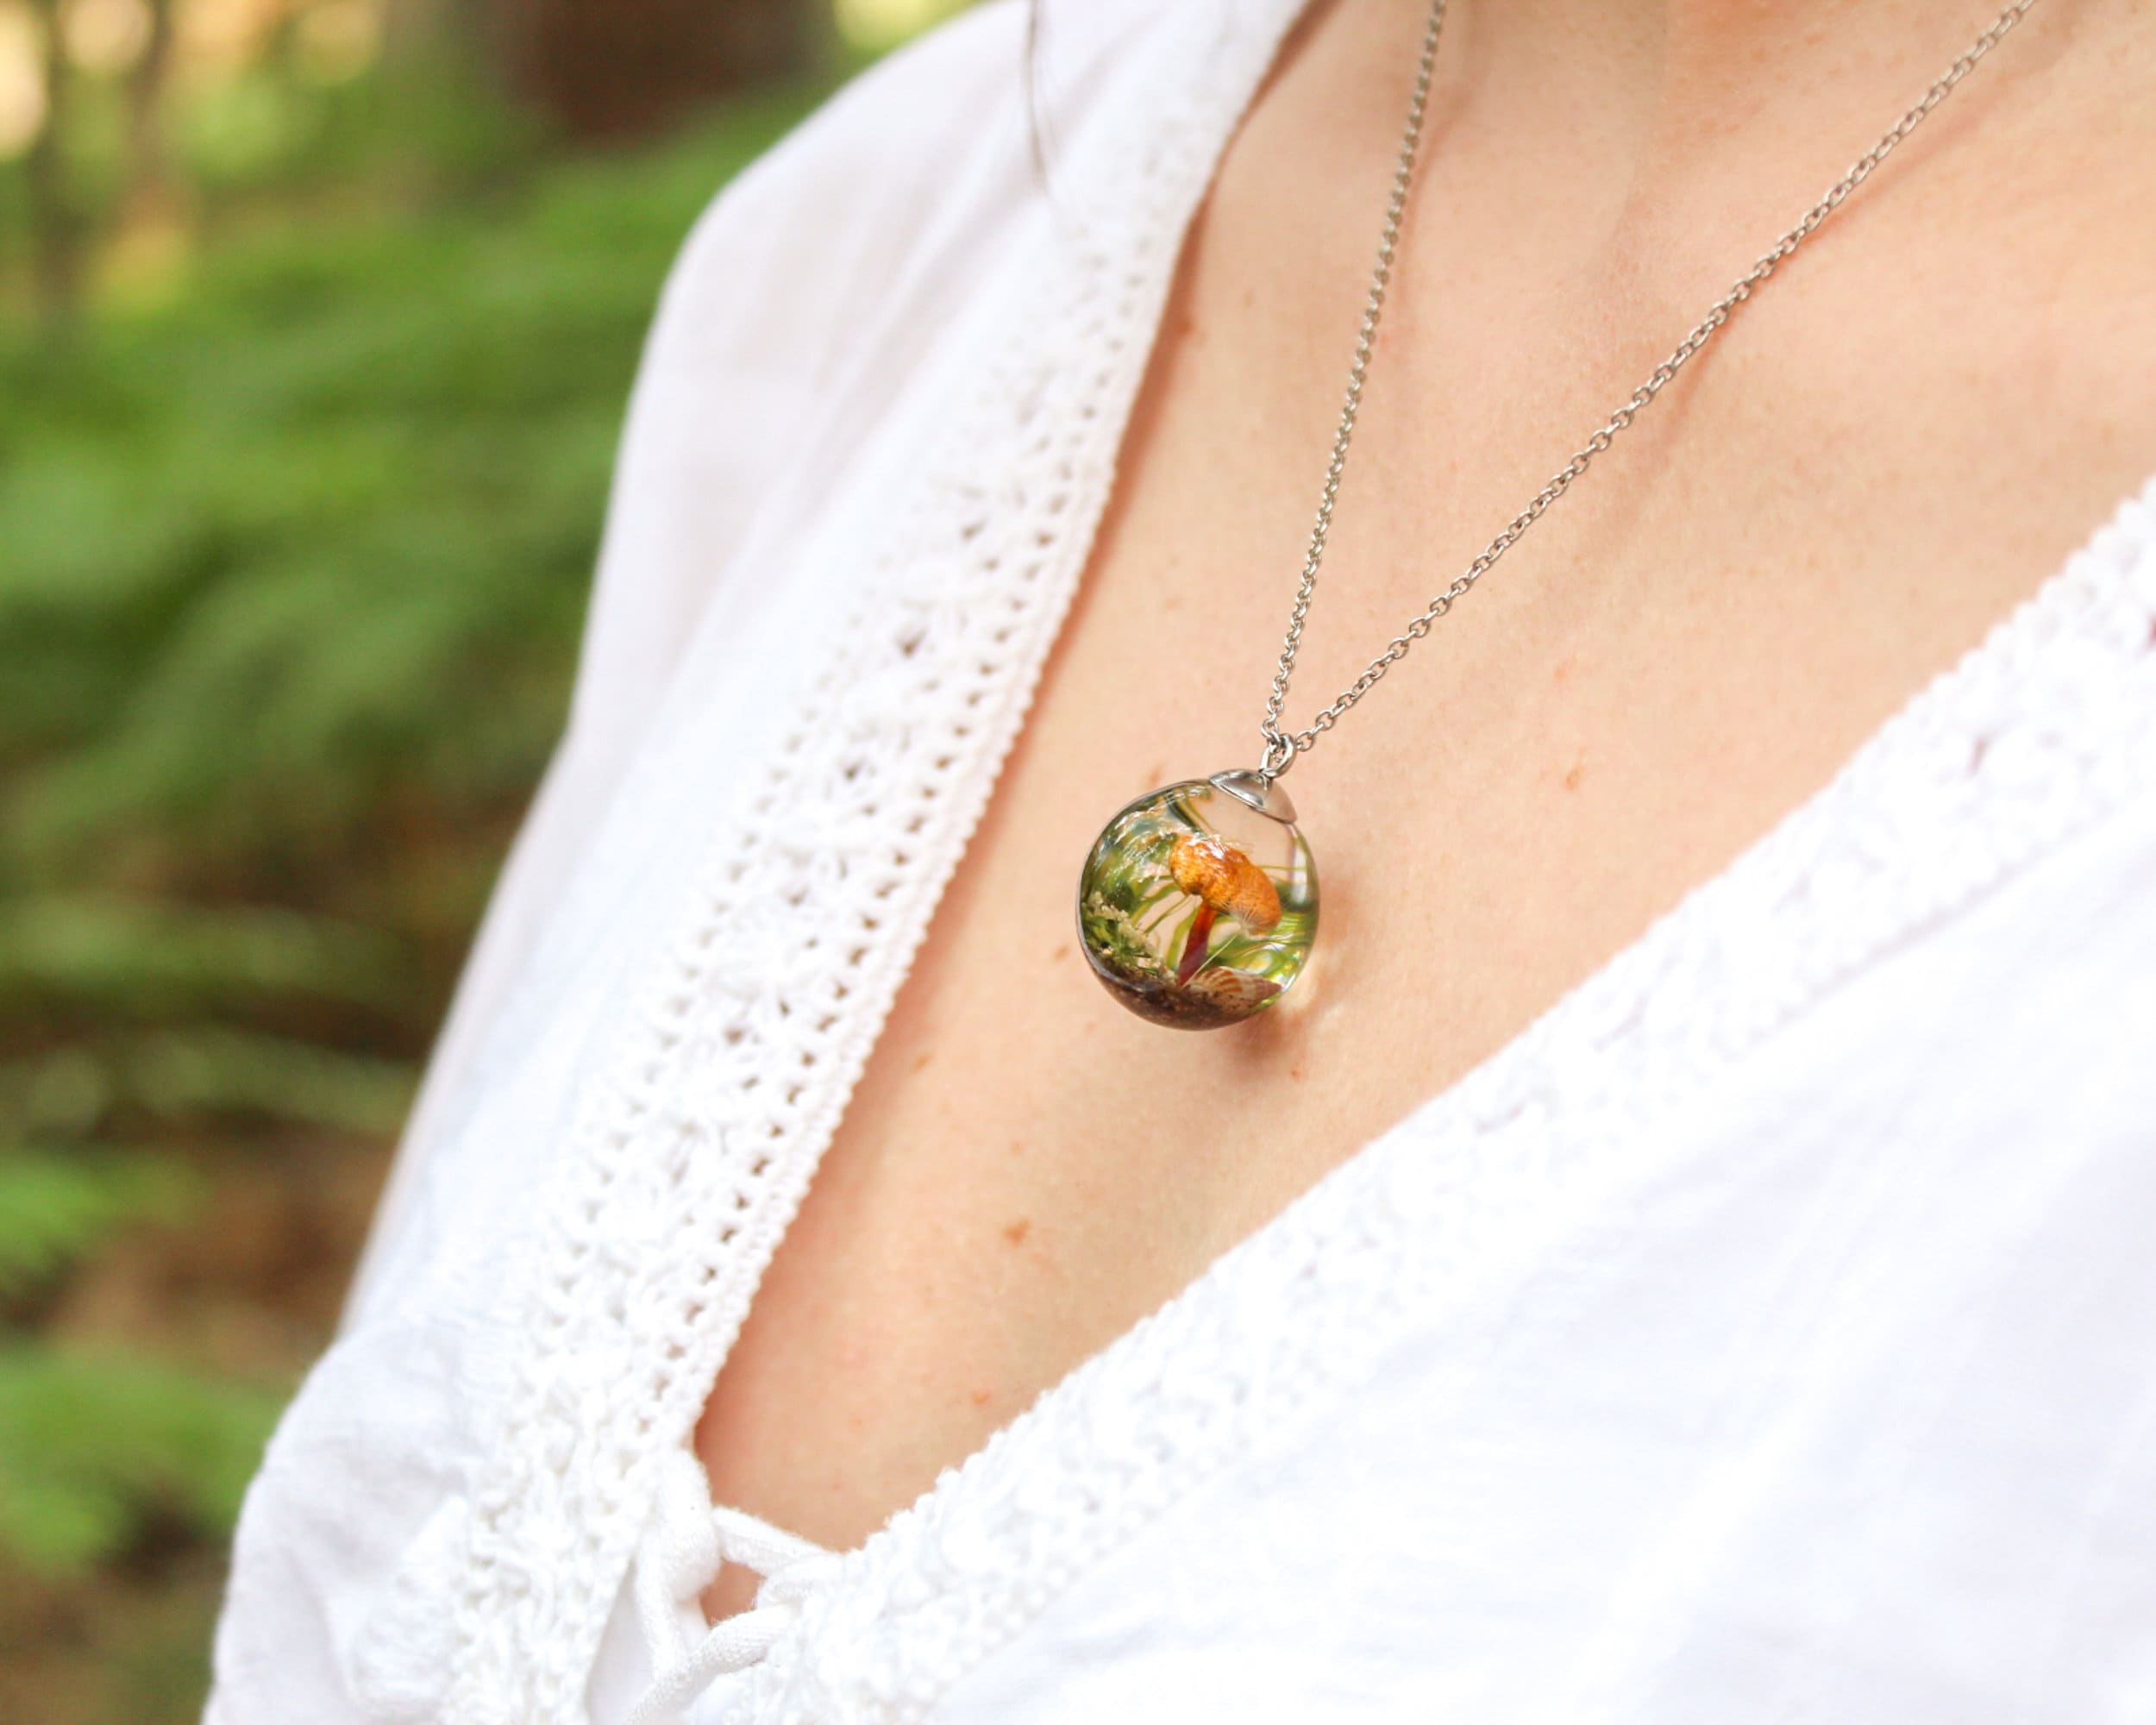 Magical Eco-Resin Jewelry Encapsulates Ireland's Wildflowers & Fungi